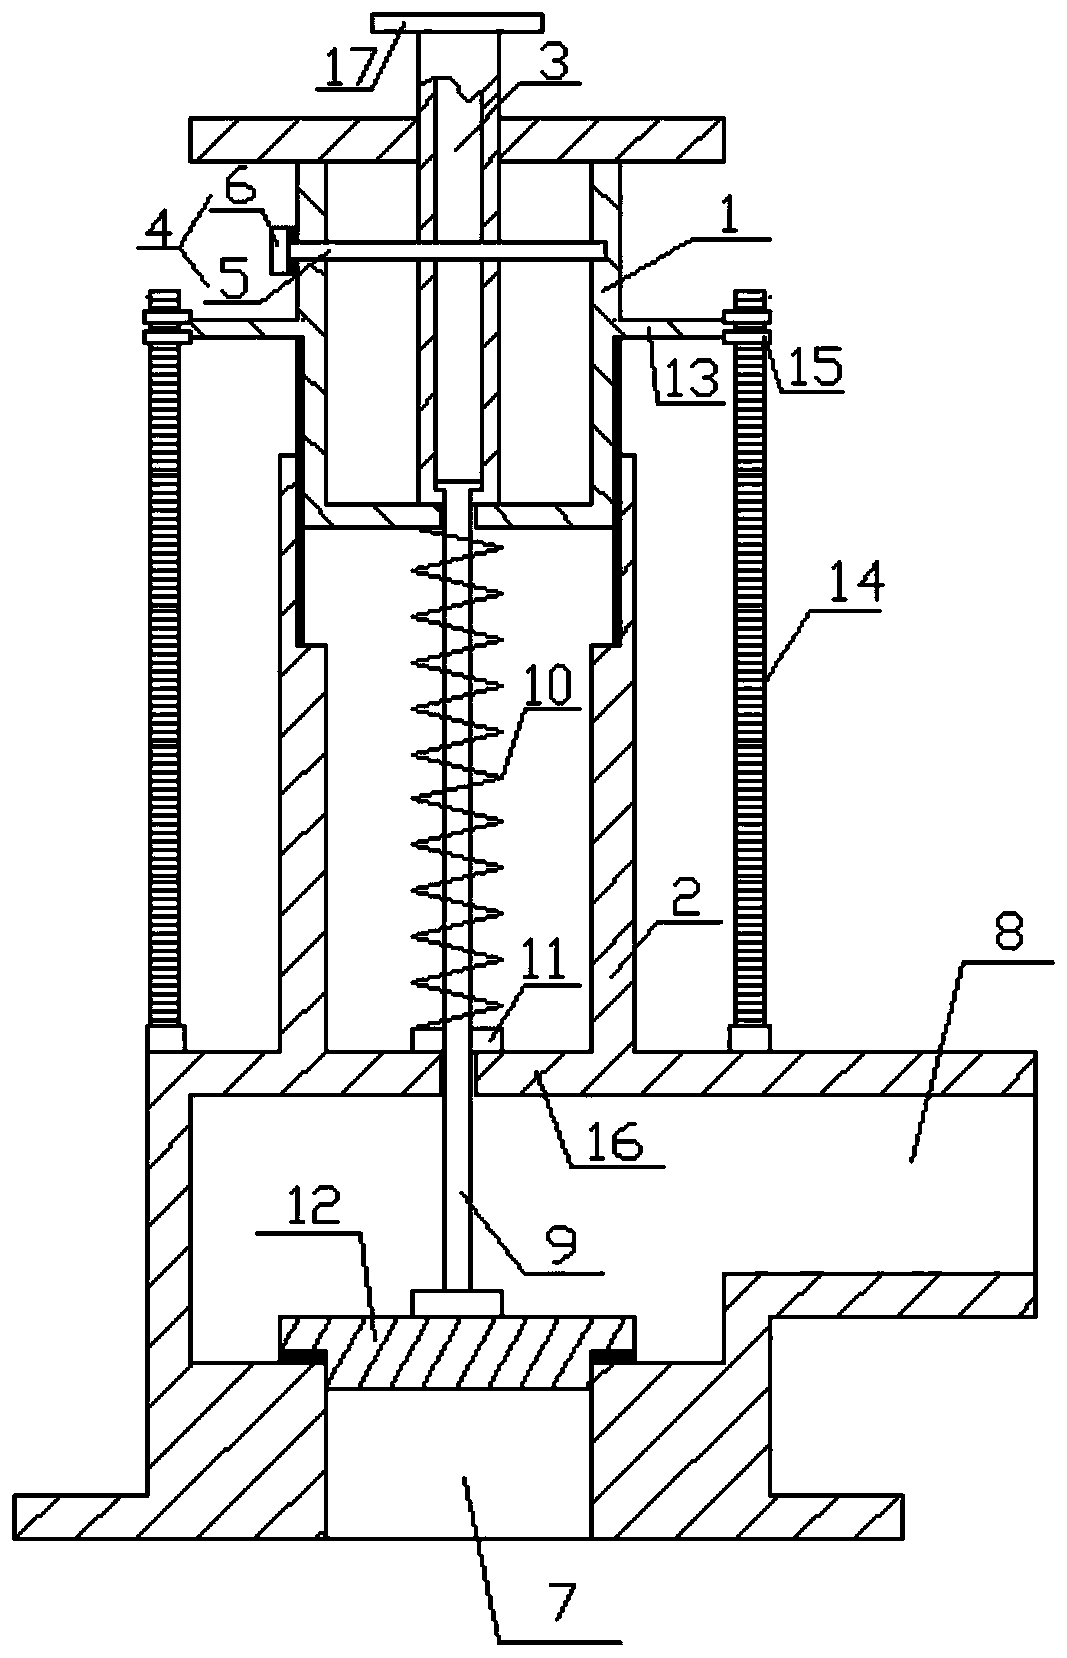 An adjustable safety valve for a boiler